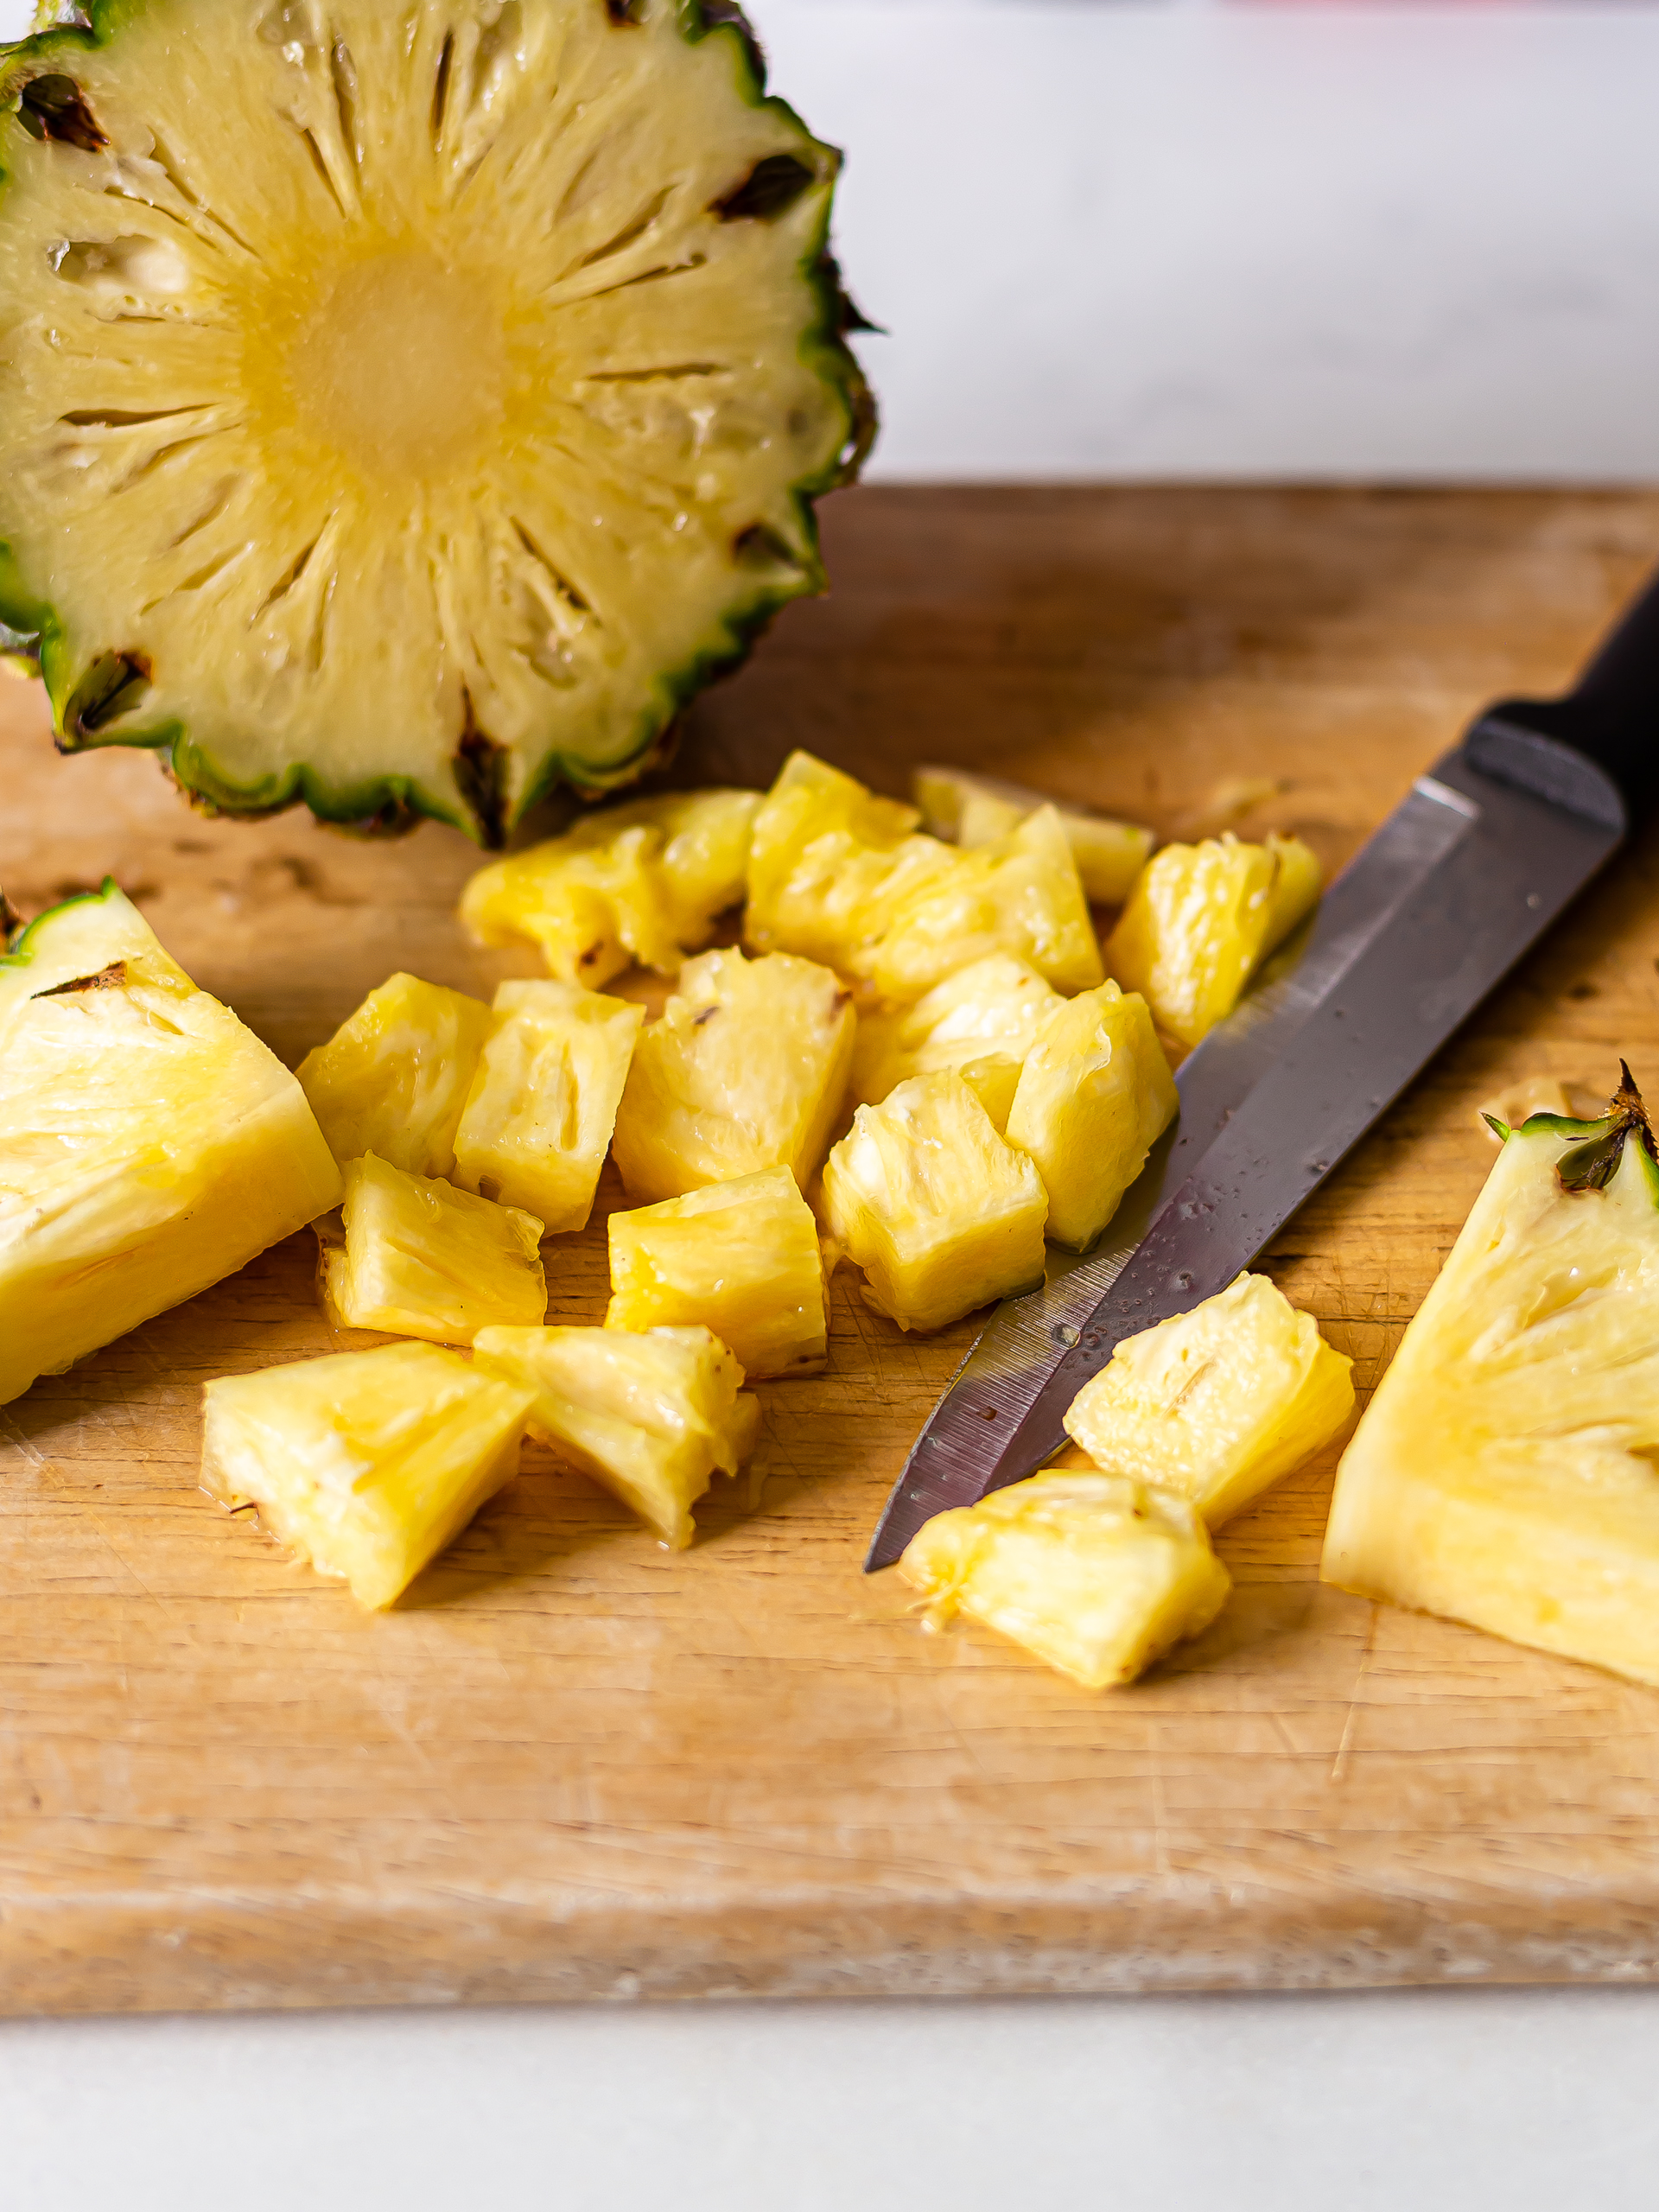 chopped pineapple